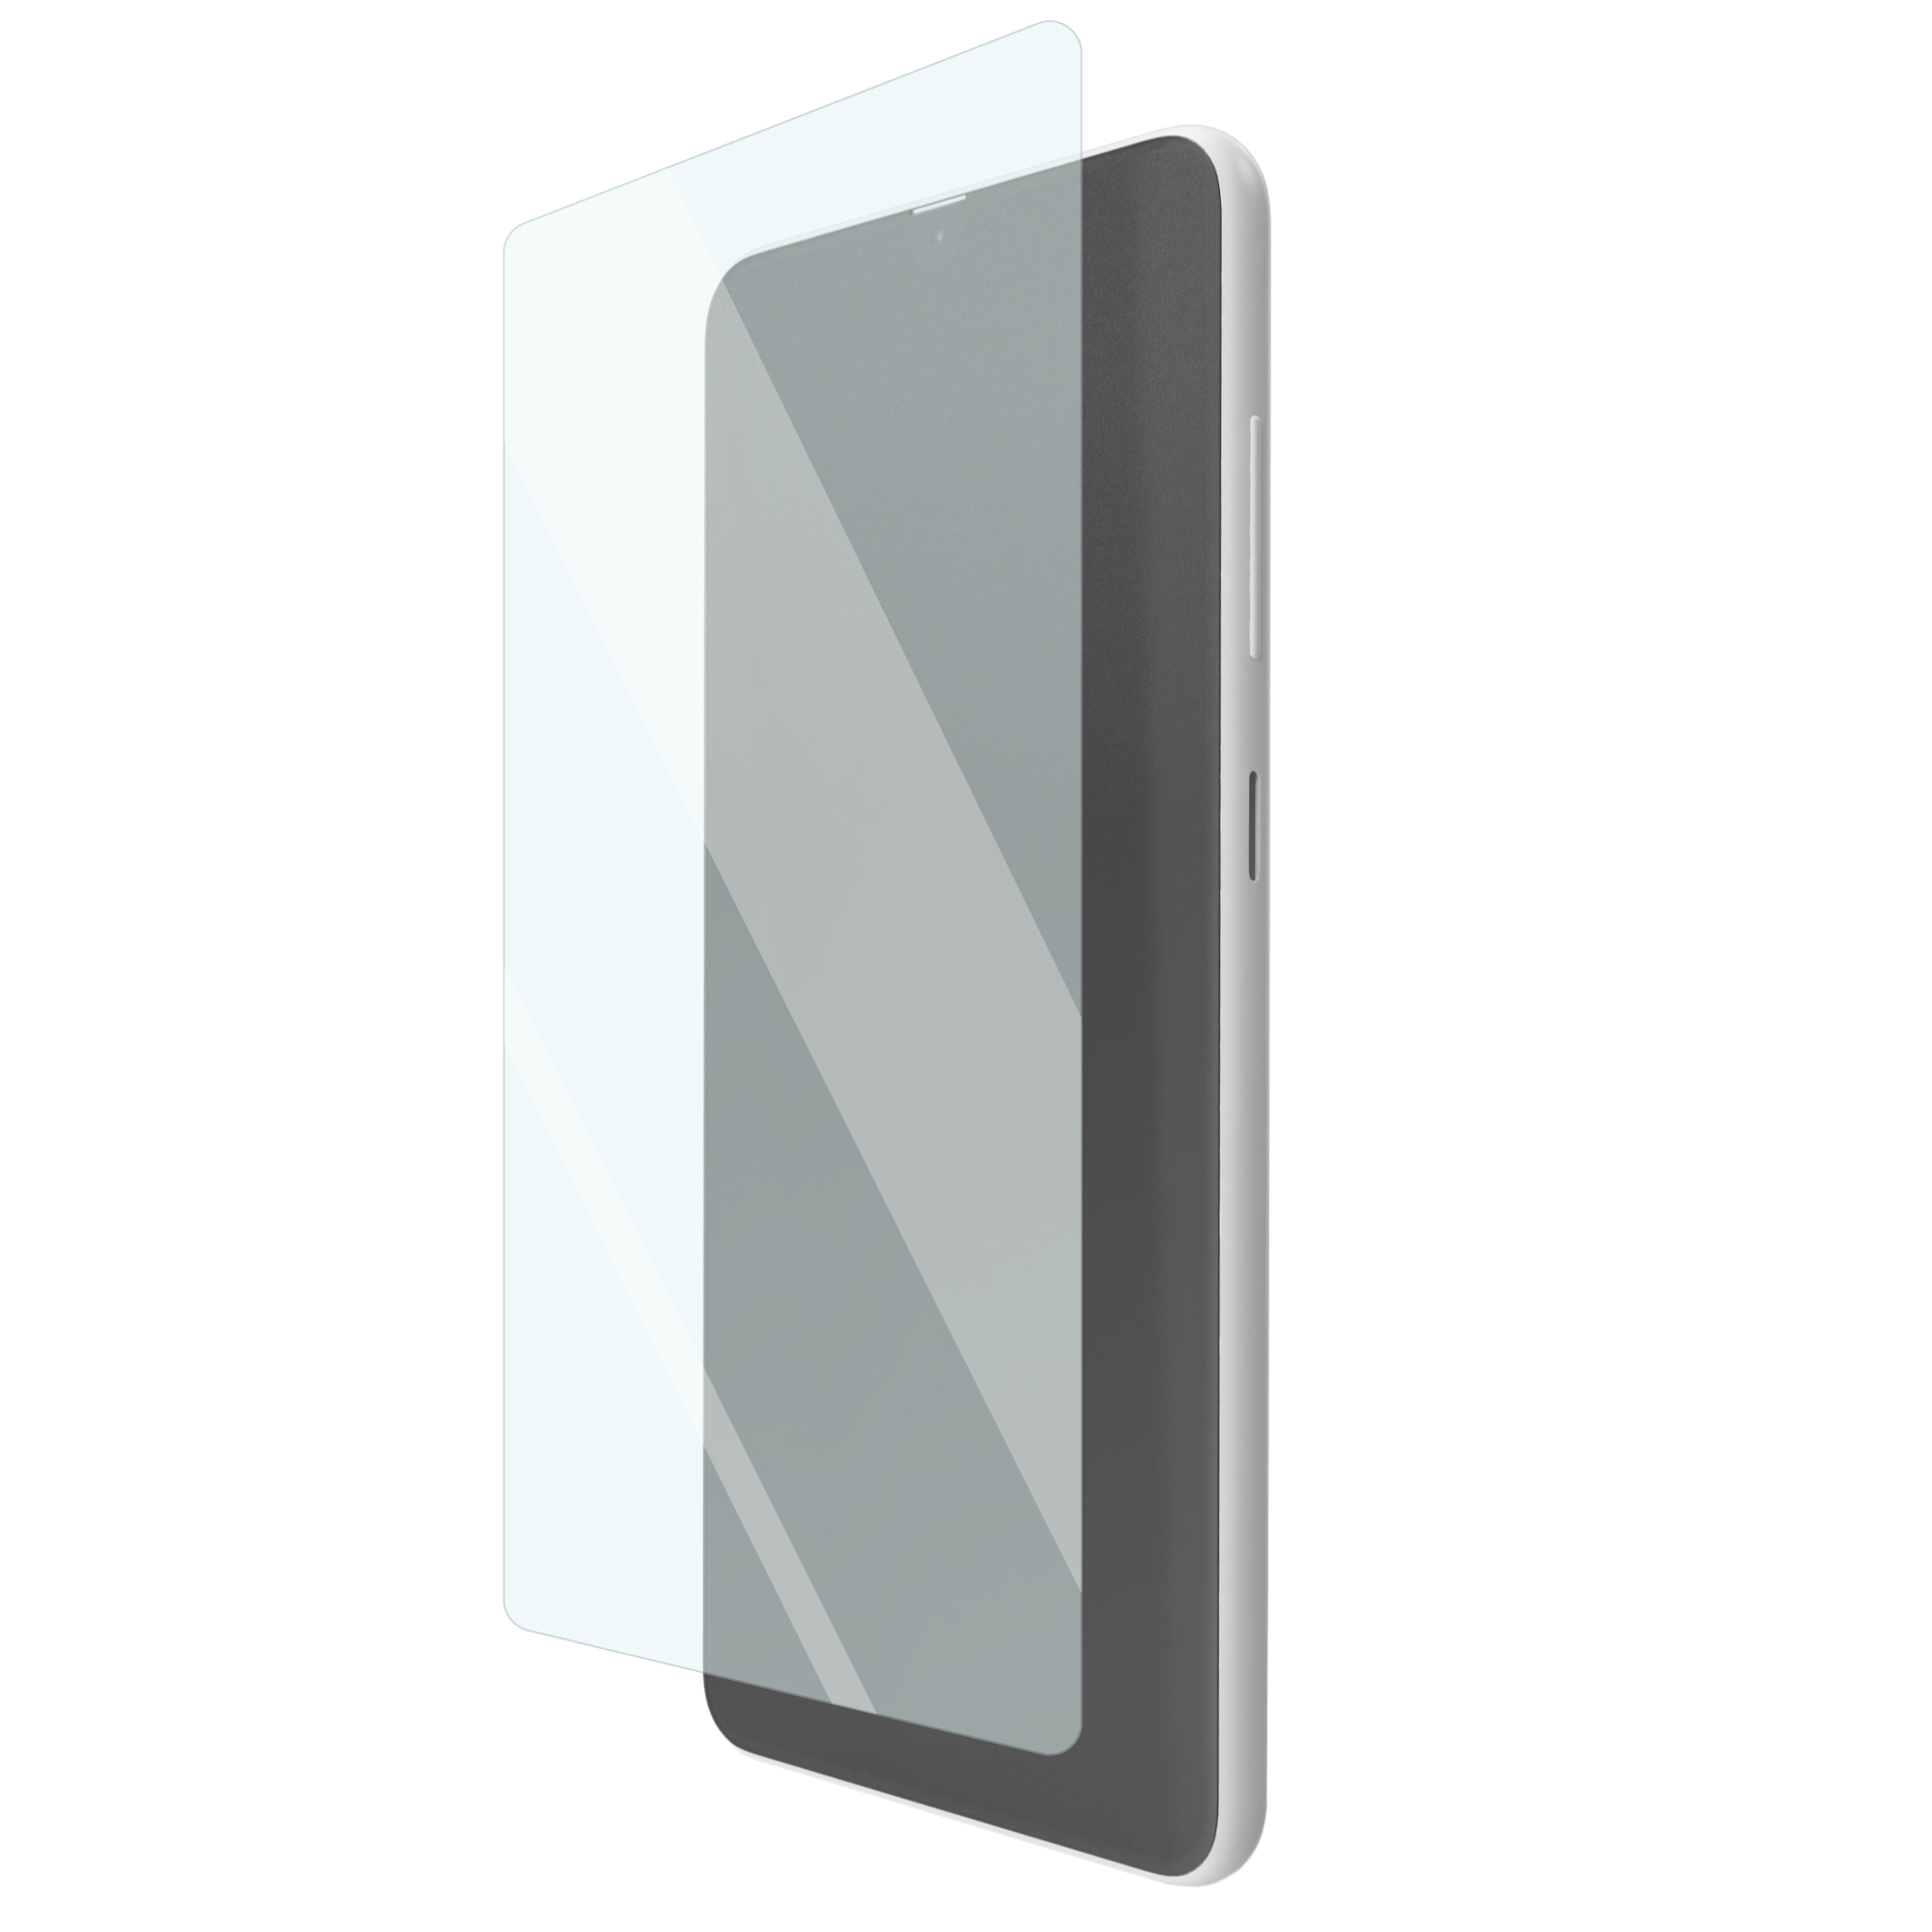 Folie de protectie silicon ShieldUP HiTech Regenerable pentru Apple iPhone 13 Pro Max thumb